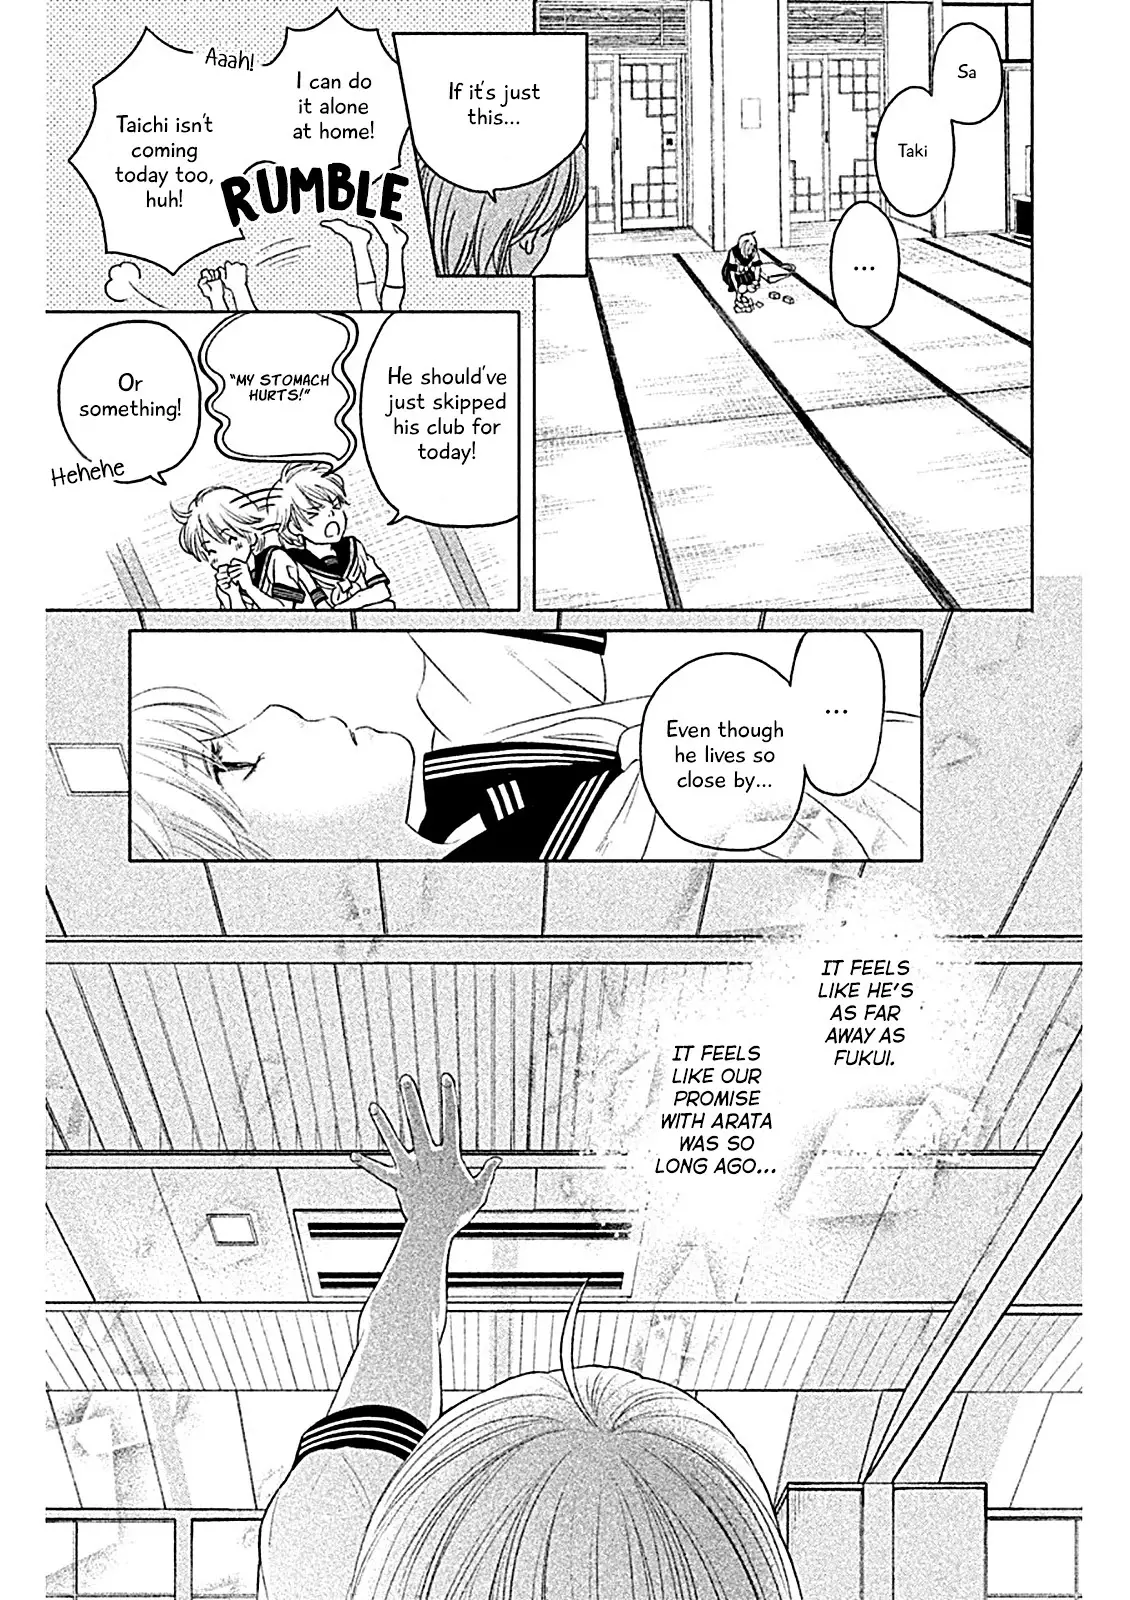 Chihayafuru: Middle School Arc - 1 page 13